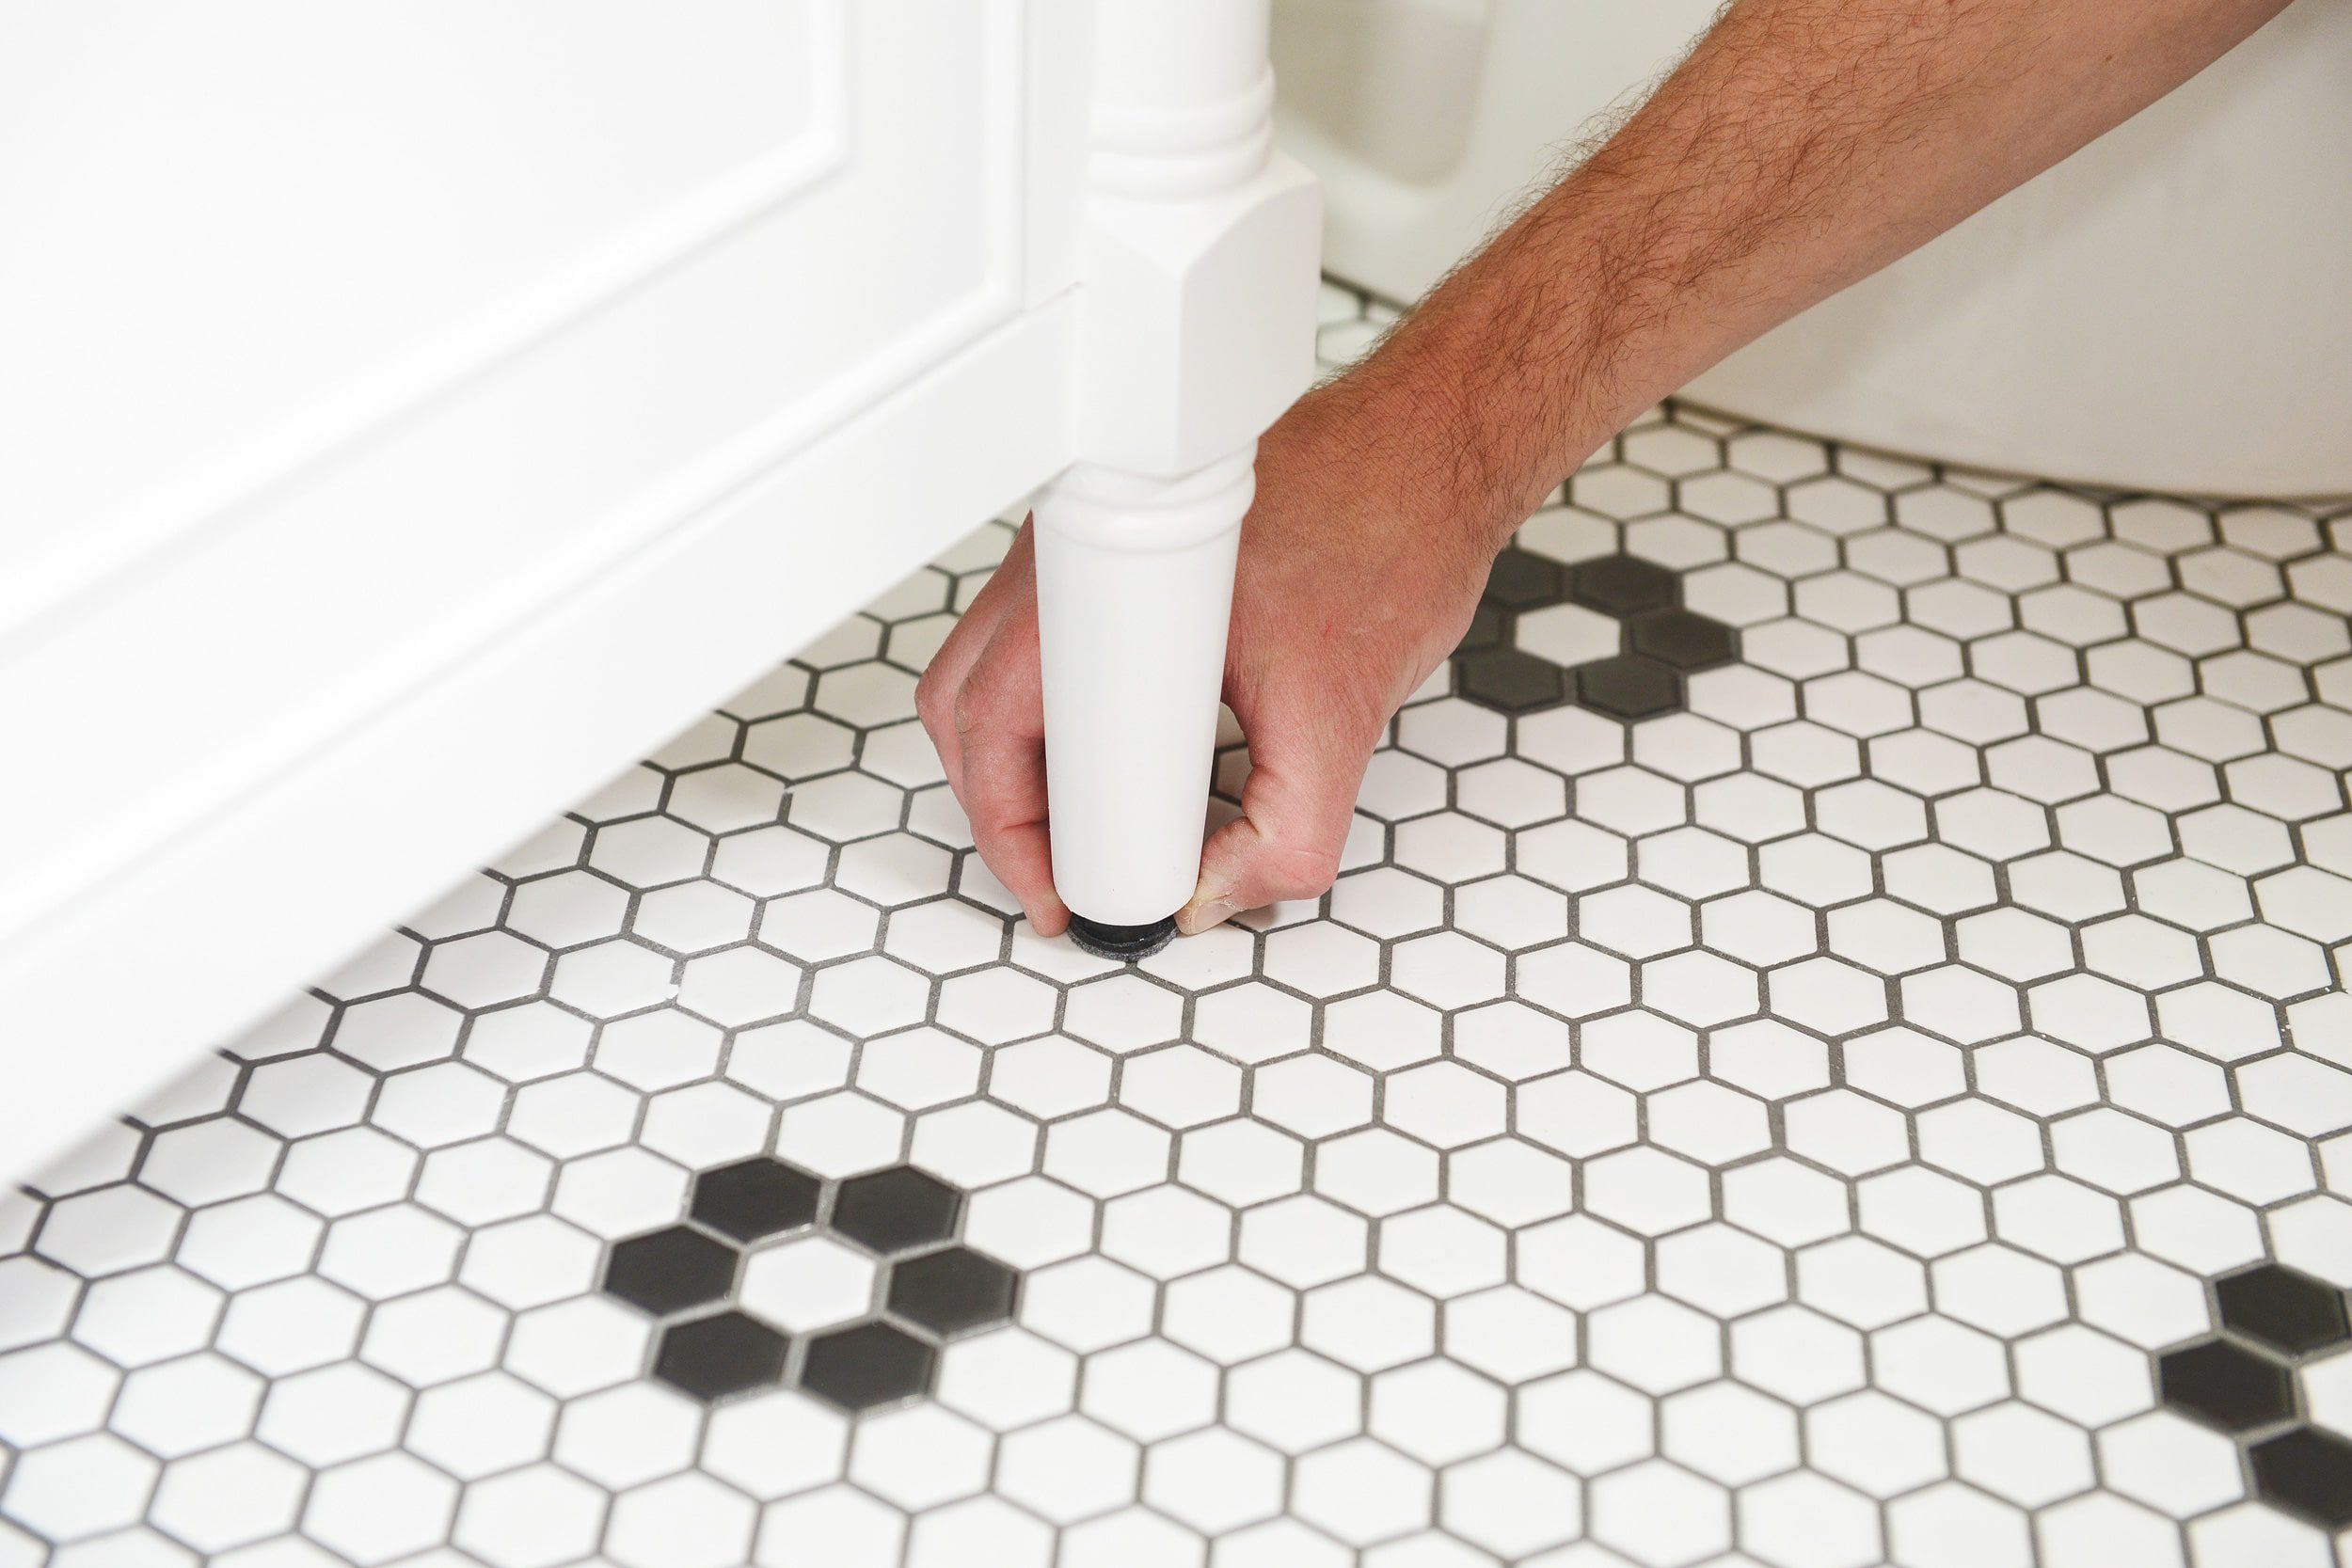 Simple 5 step bathroom vanity installation | how to install a bathroom vanity and faucet | via Yellow Brick Home